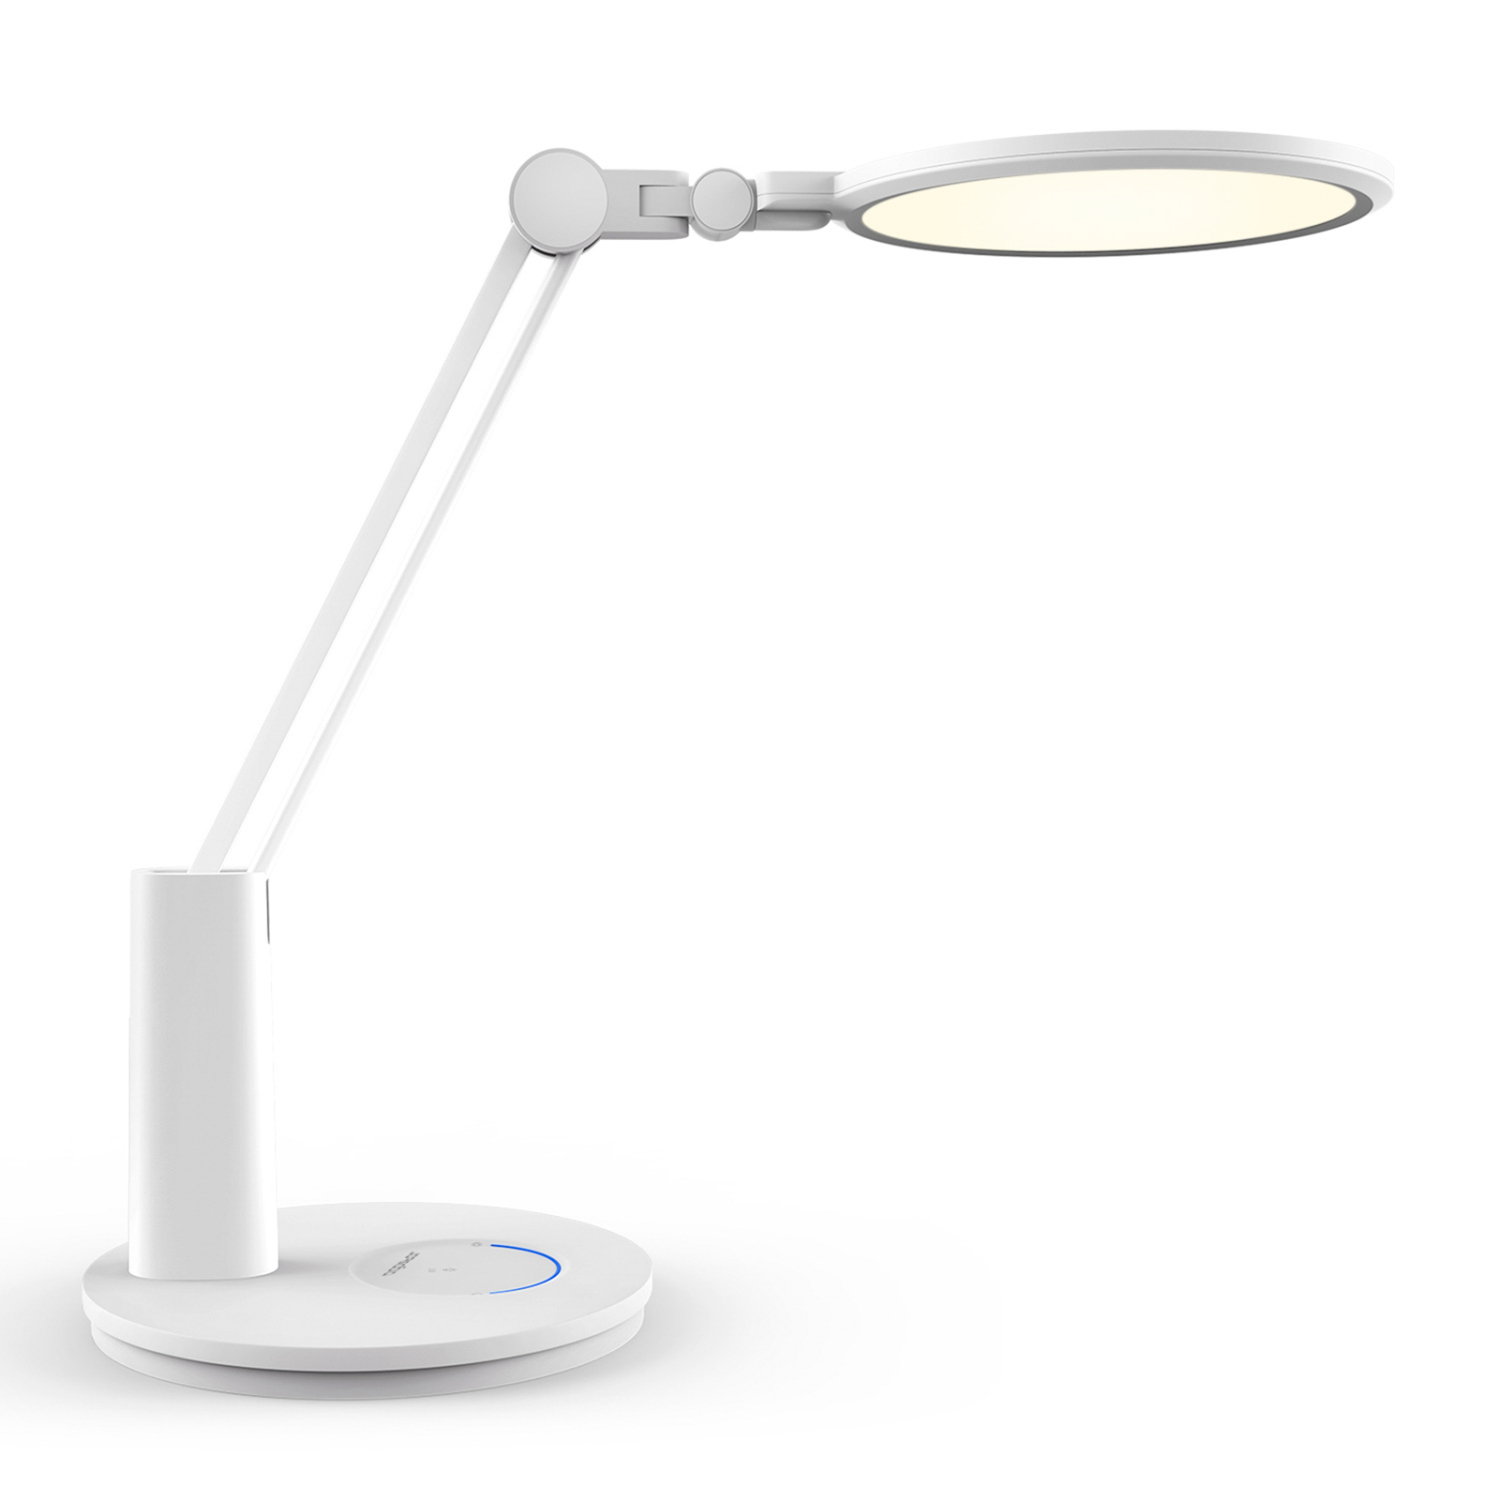 LED Bureaulamp - Veilig licht - 4000K - 18W - Geen RG0 blauw licht, professionele leeslamp